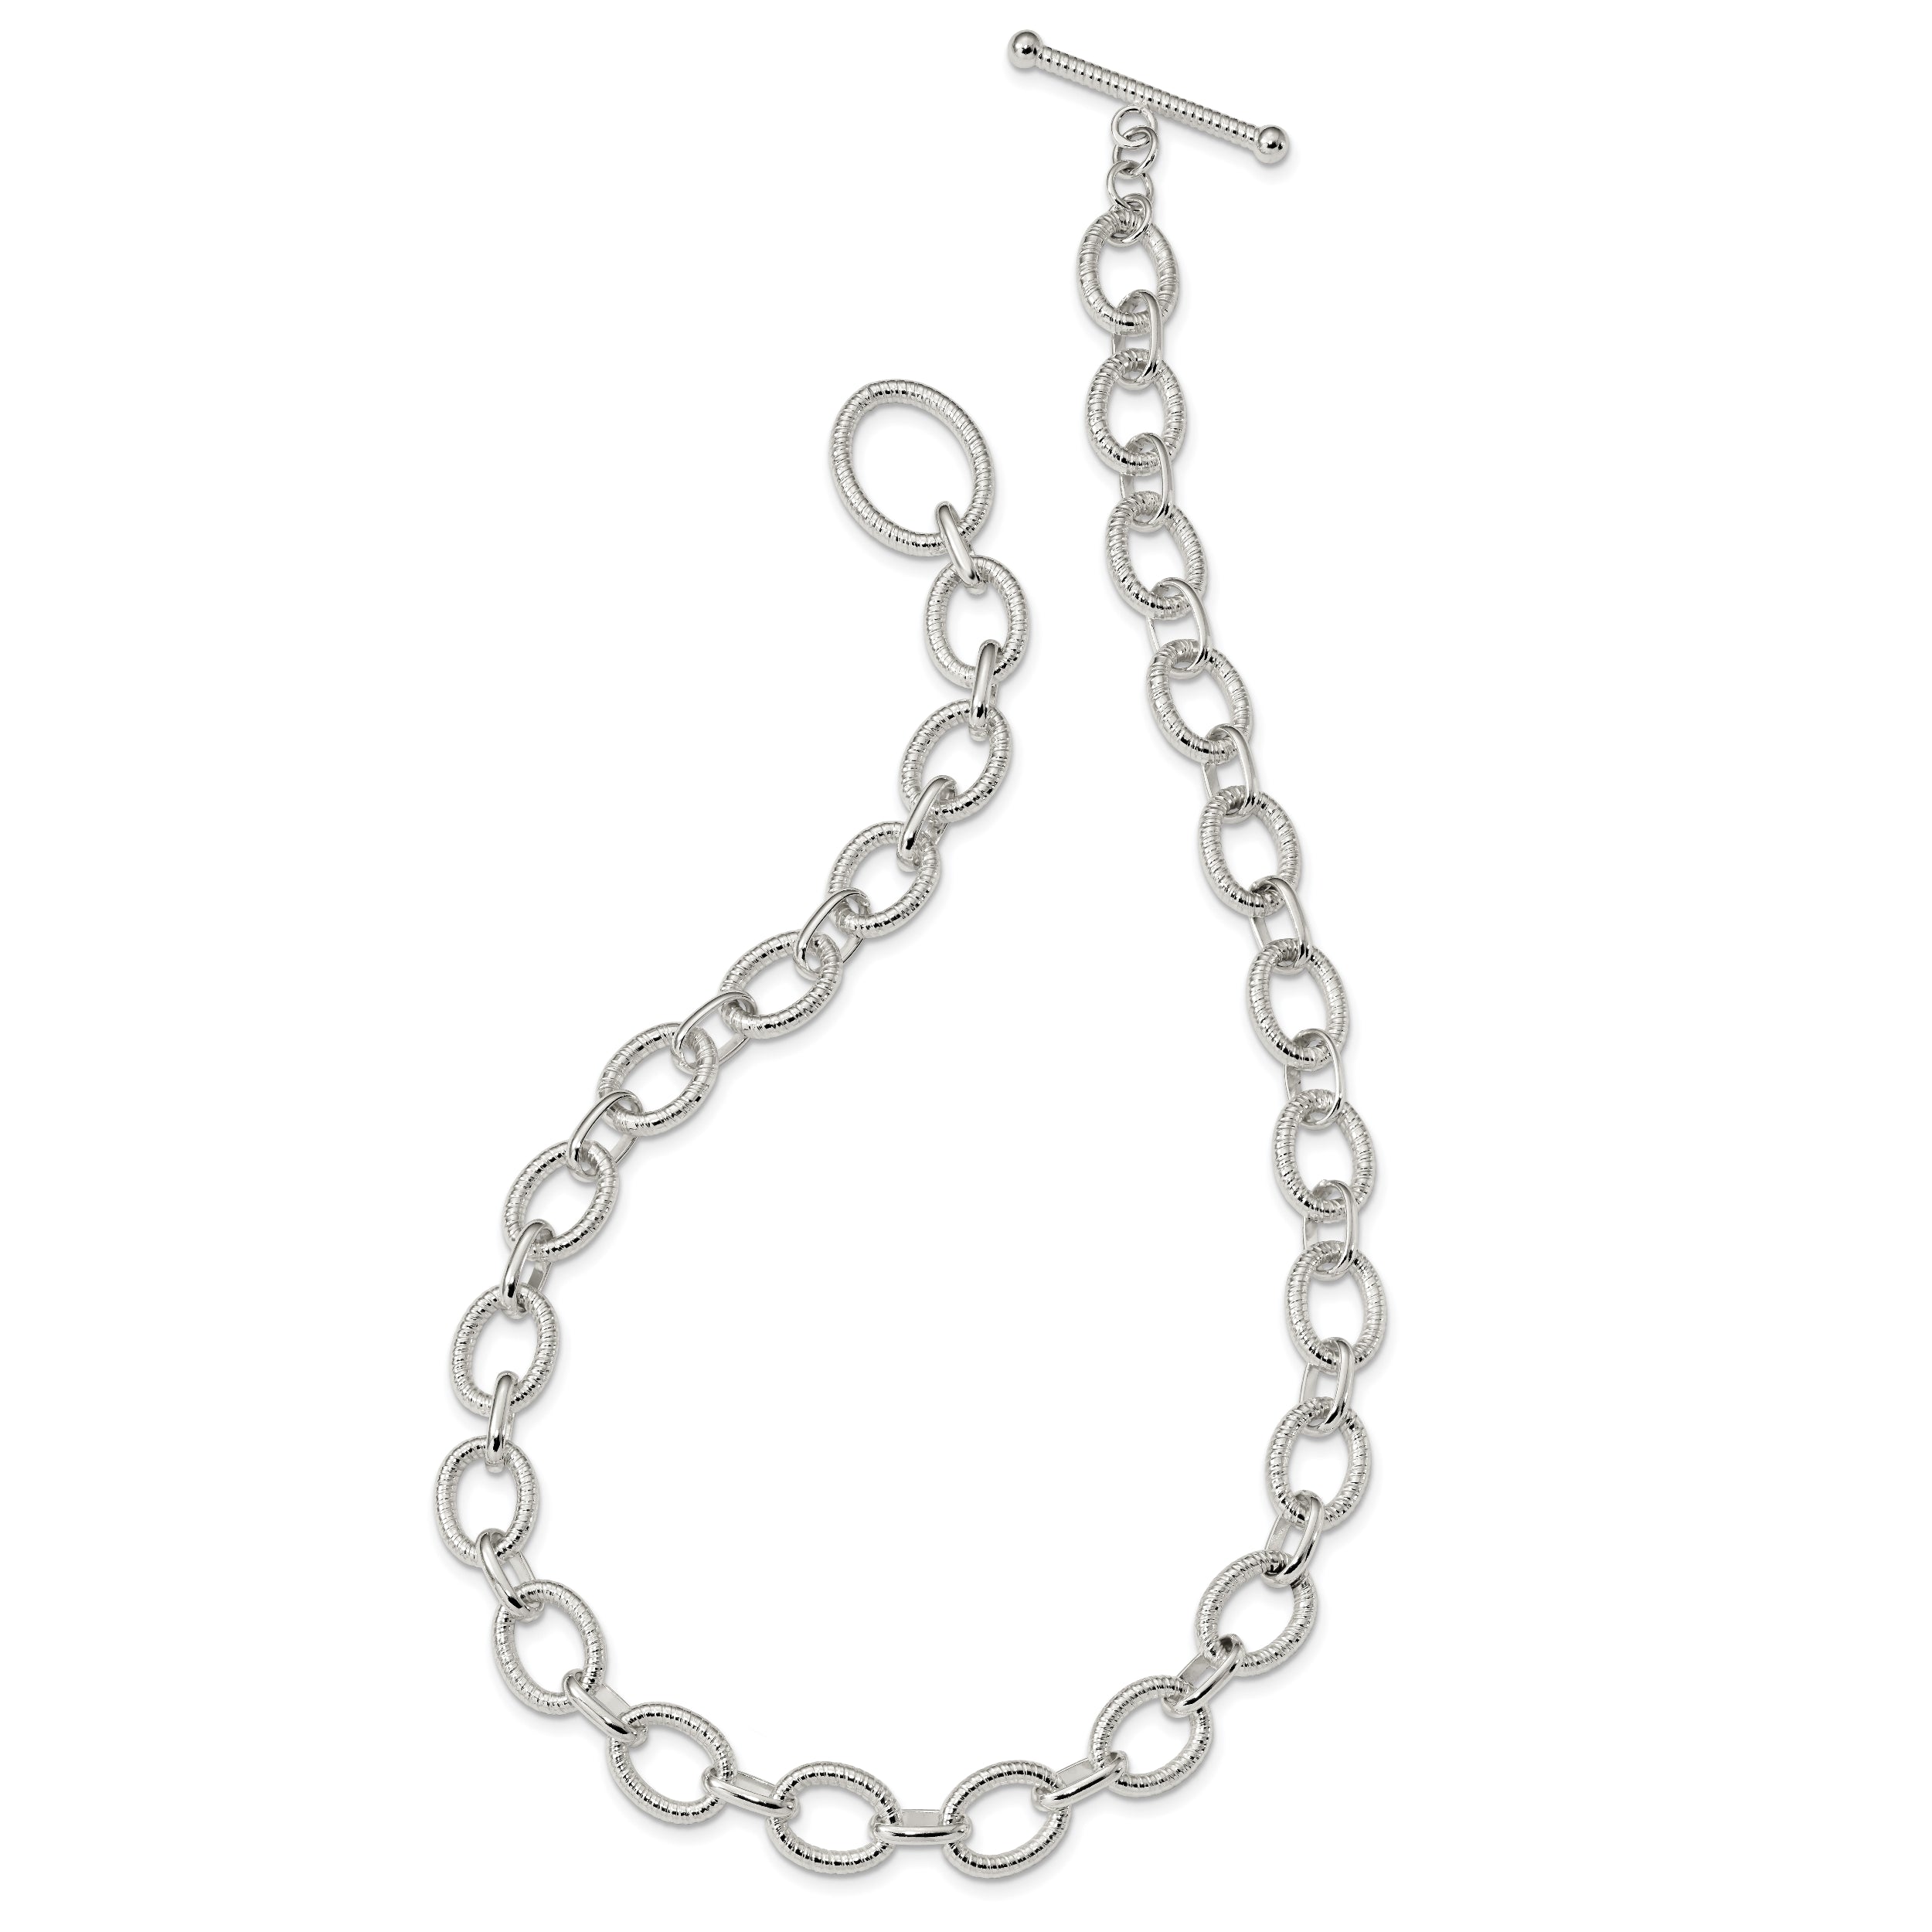 Sterling Silver Polished Fancy Link Necklace